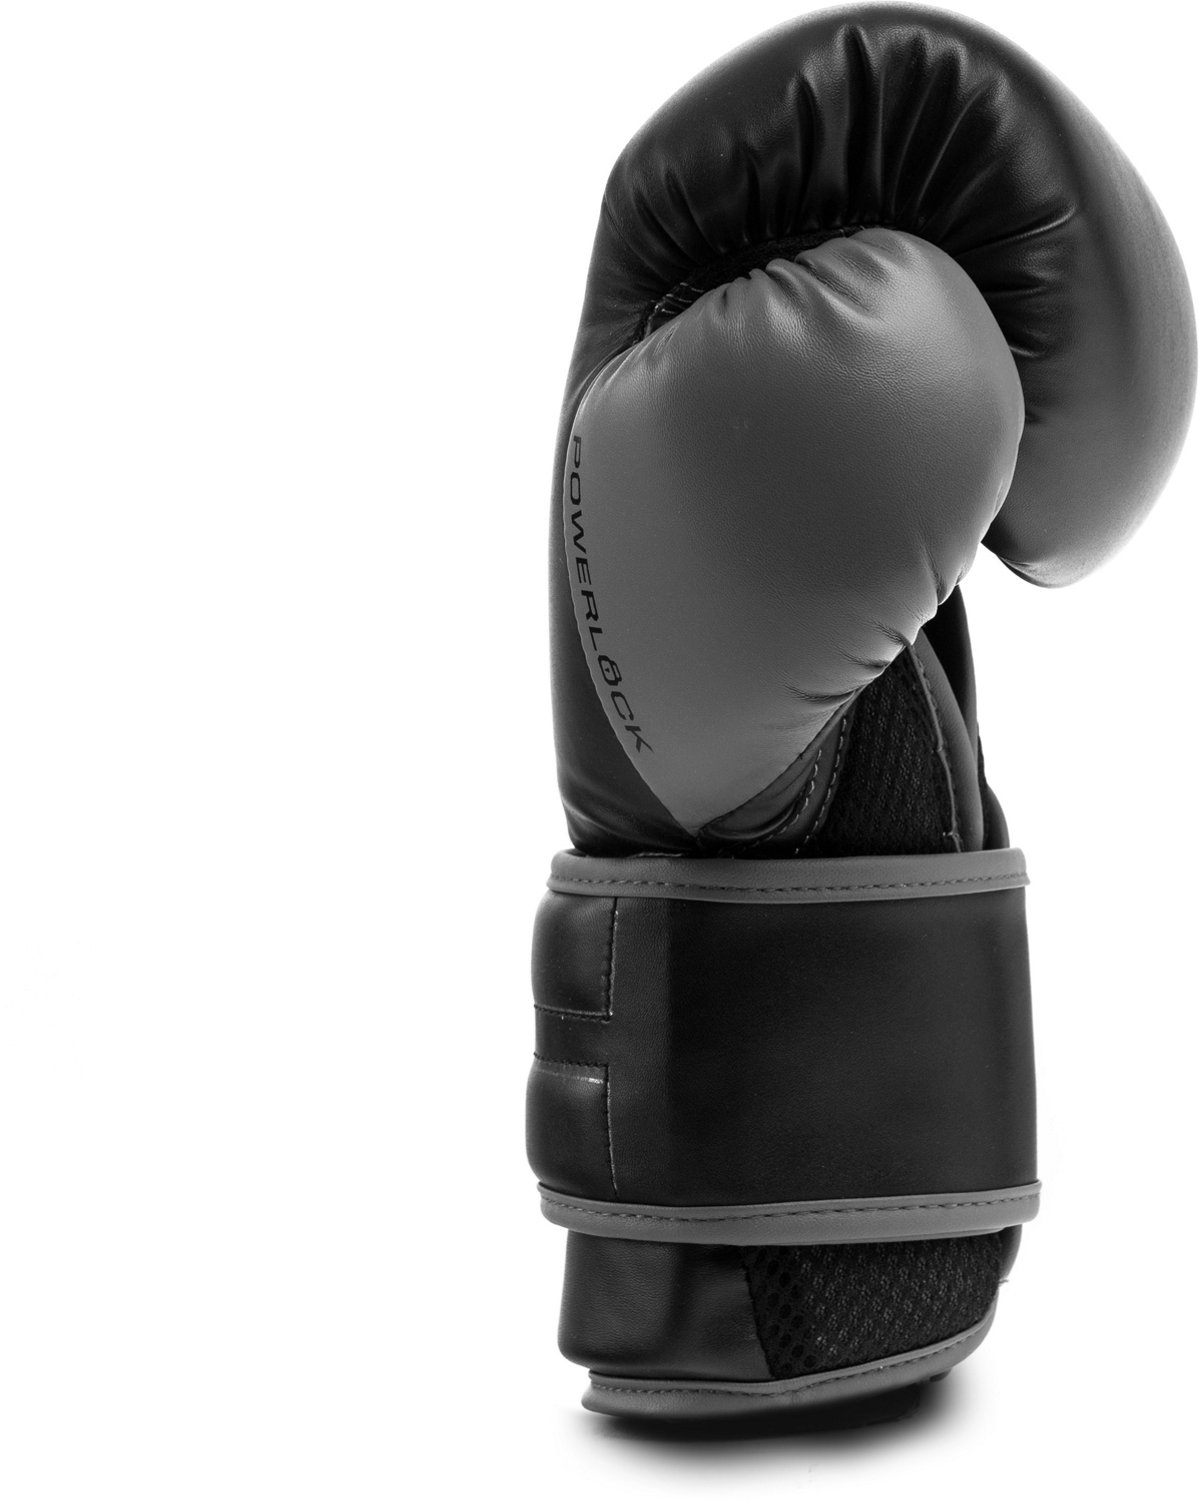 Everlast Black Leather Boxing Protector at International Jock